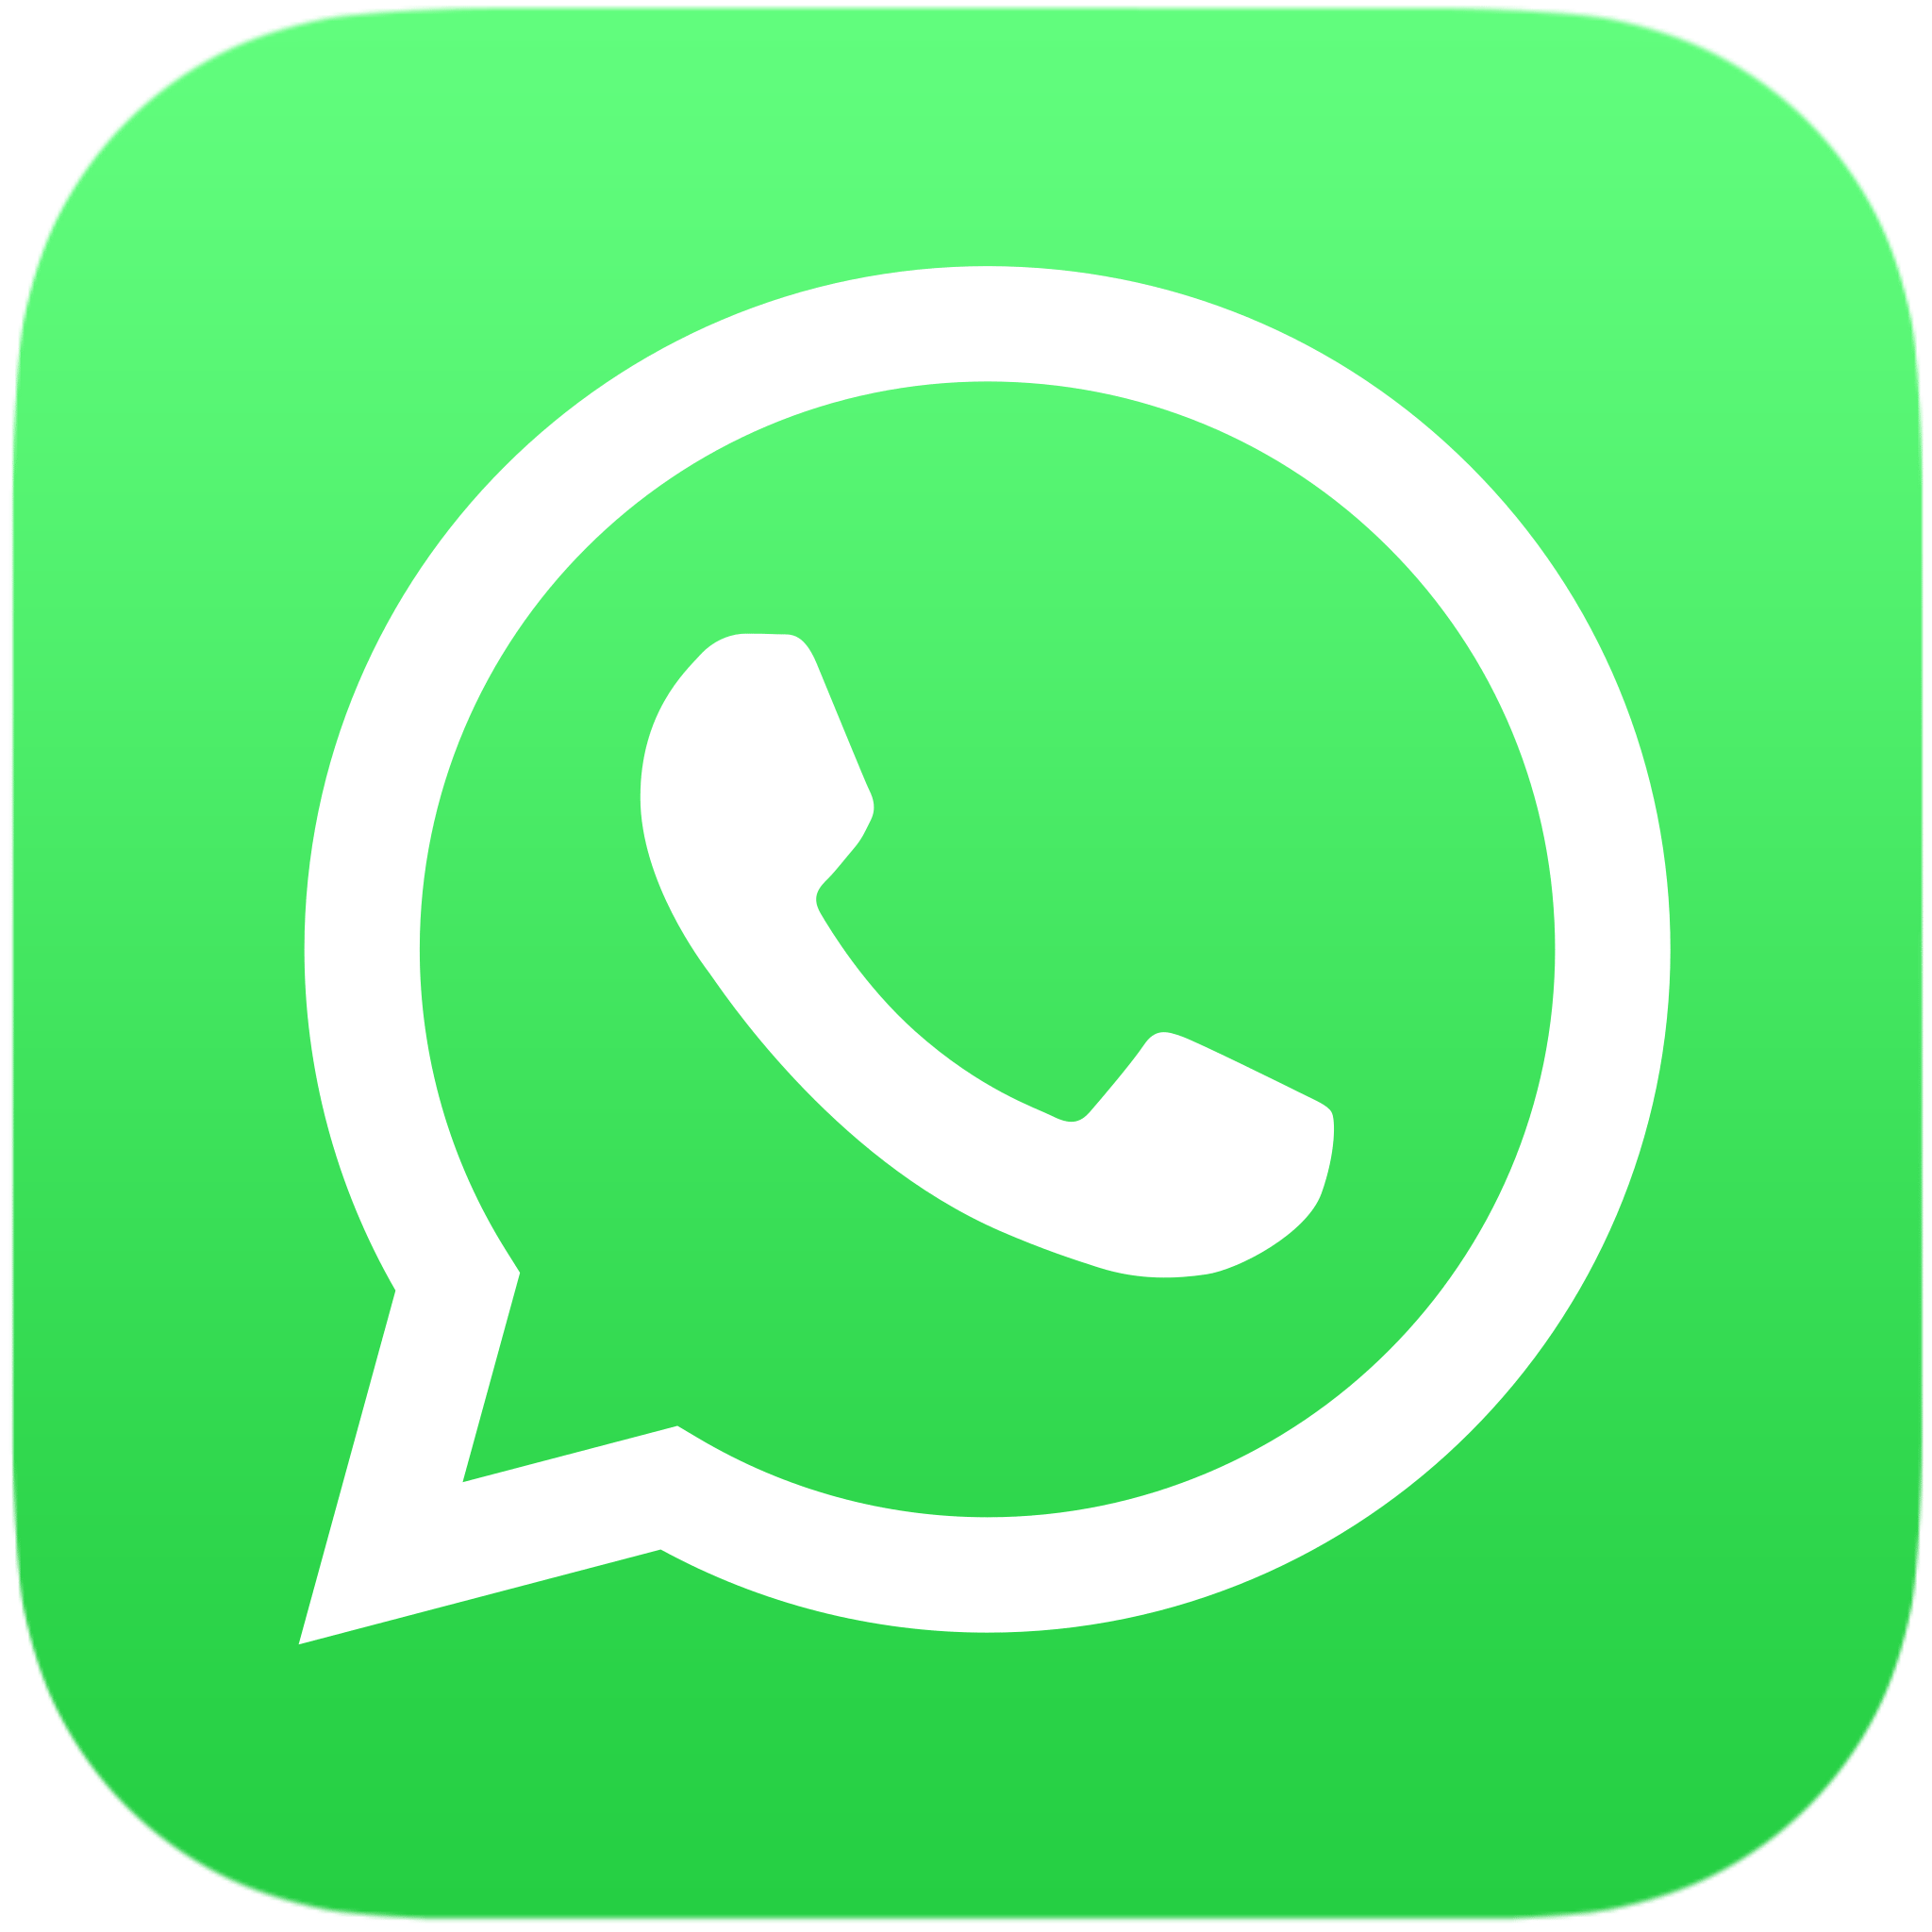 WhatsApp logo color vertical.svg